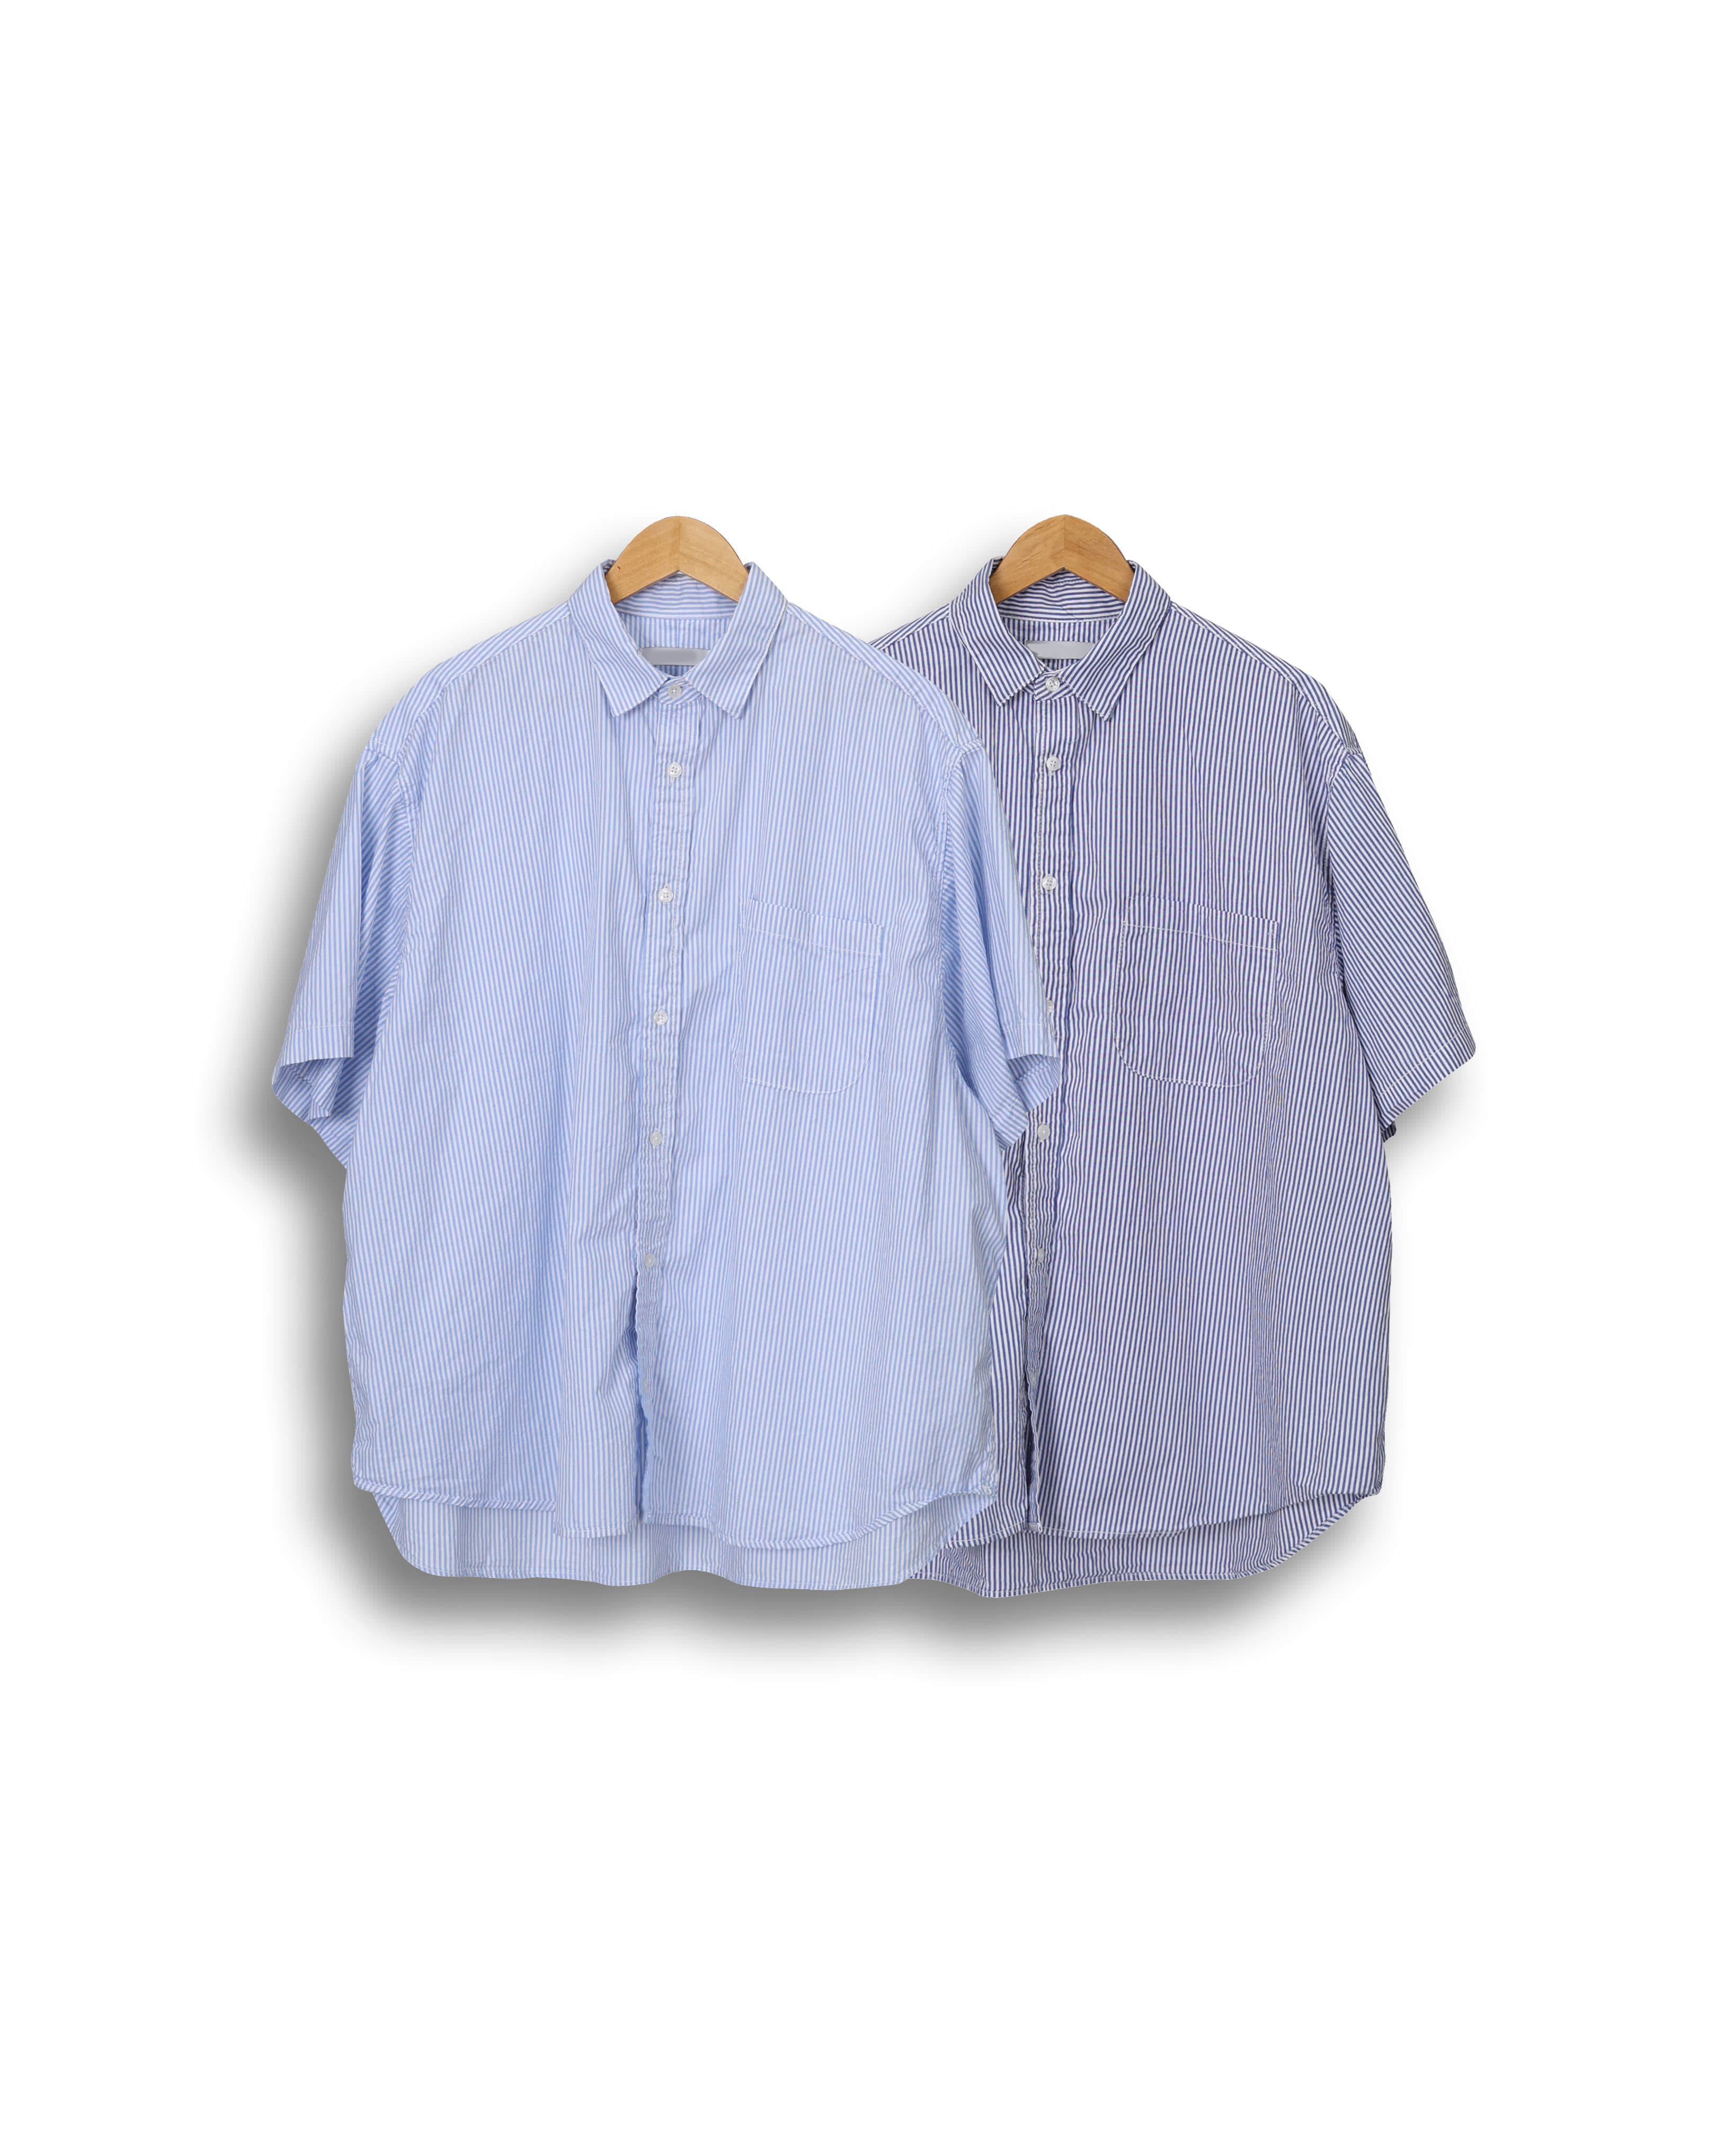 SECTOR Cityboy Wide Stripe Half Shirts (Navy/Sky Blue)